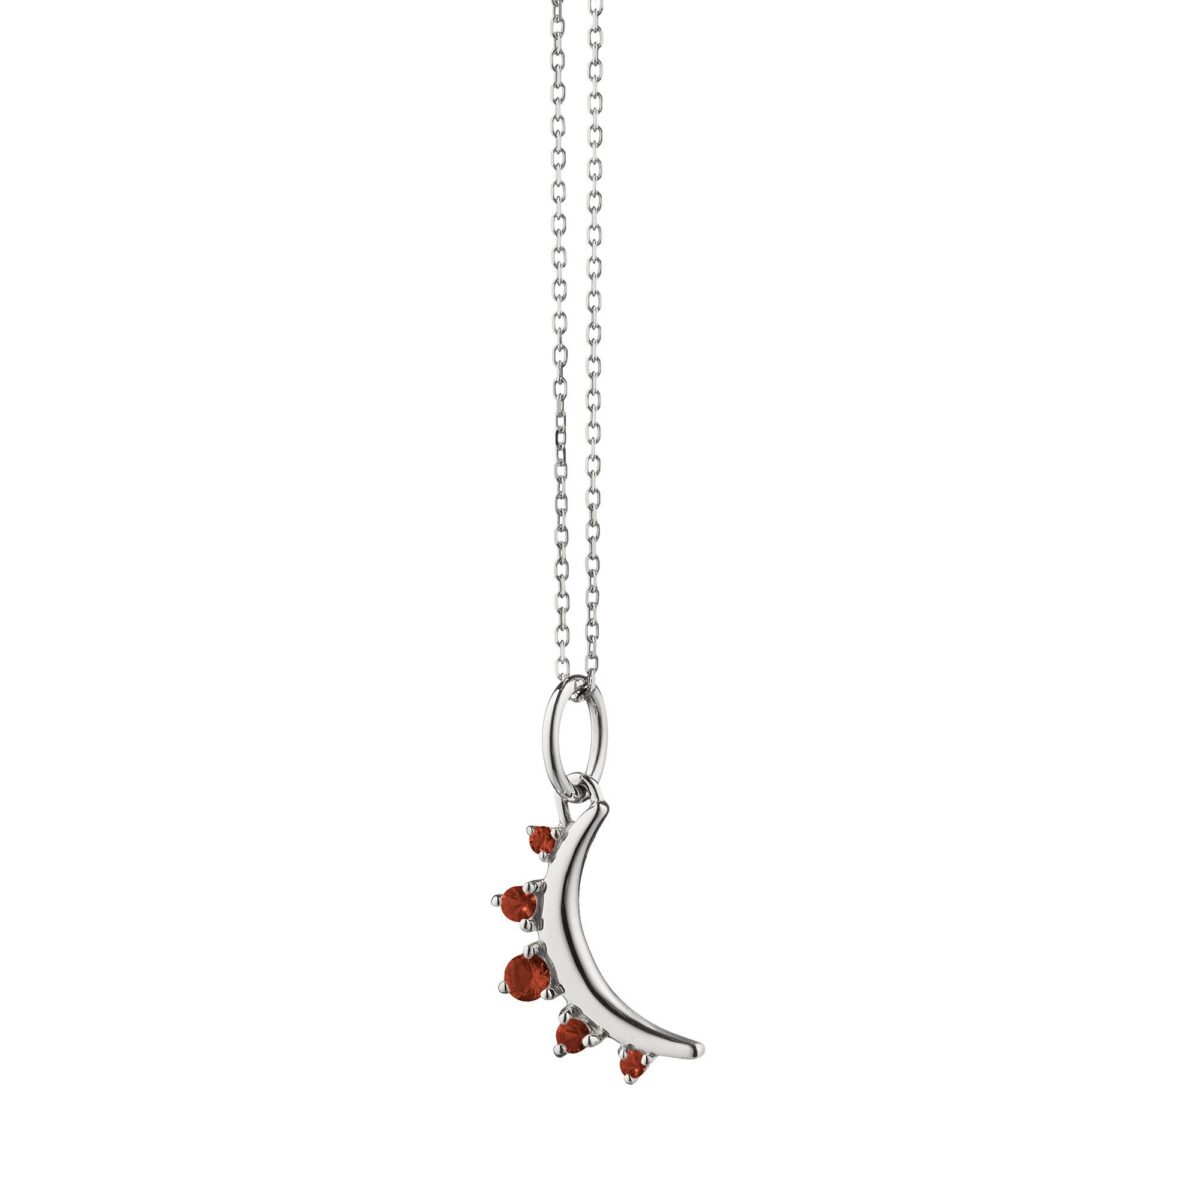 January Garnet "Moon" Necklace